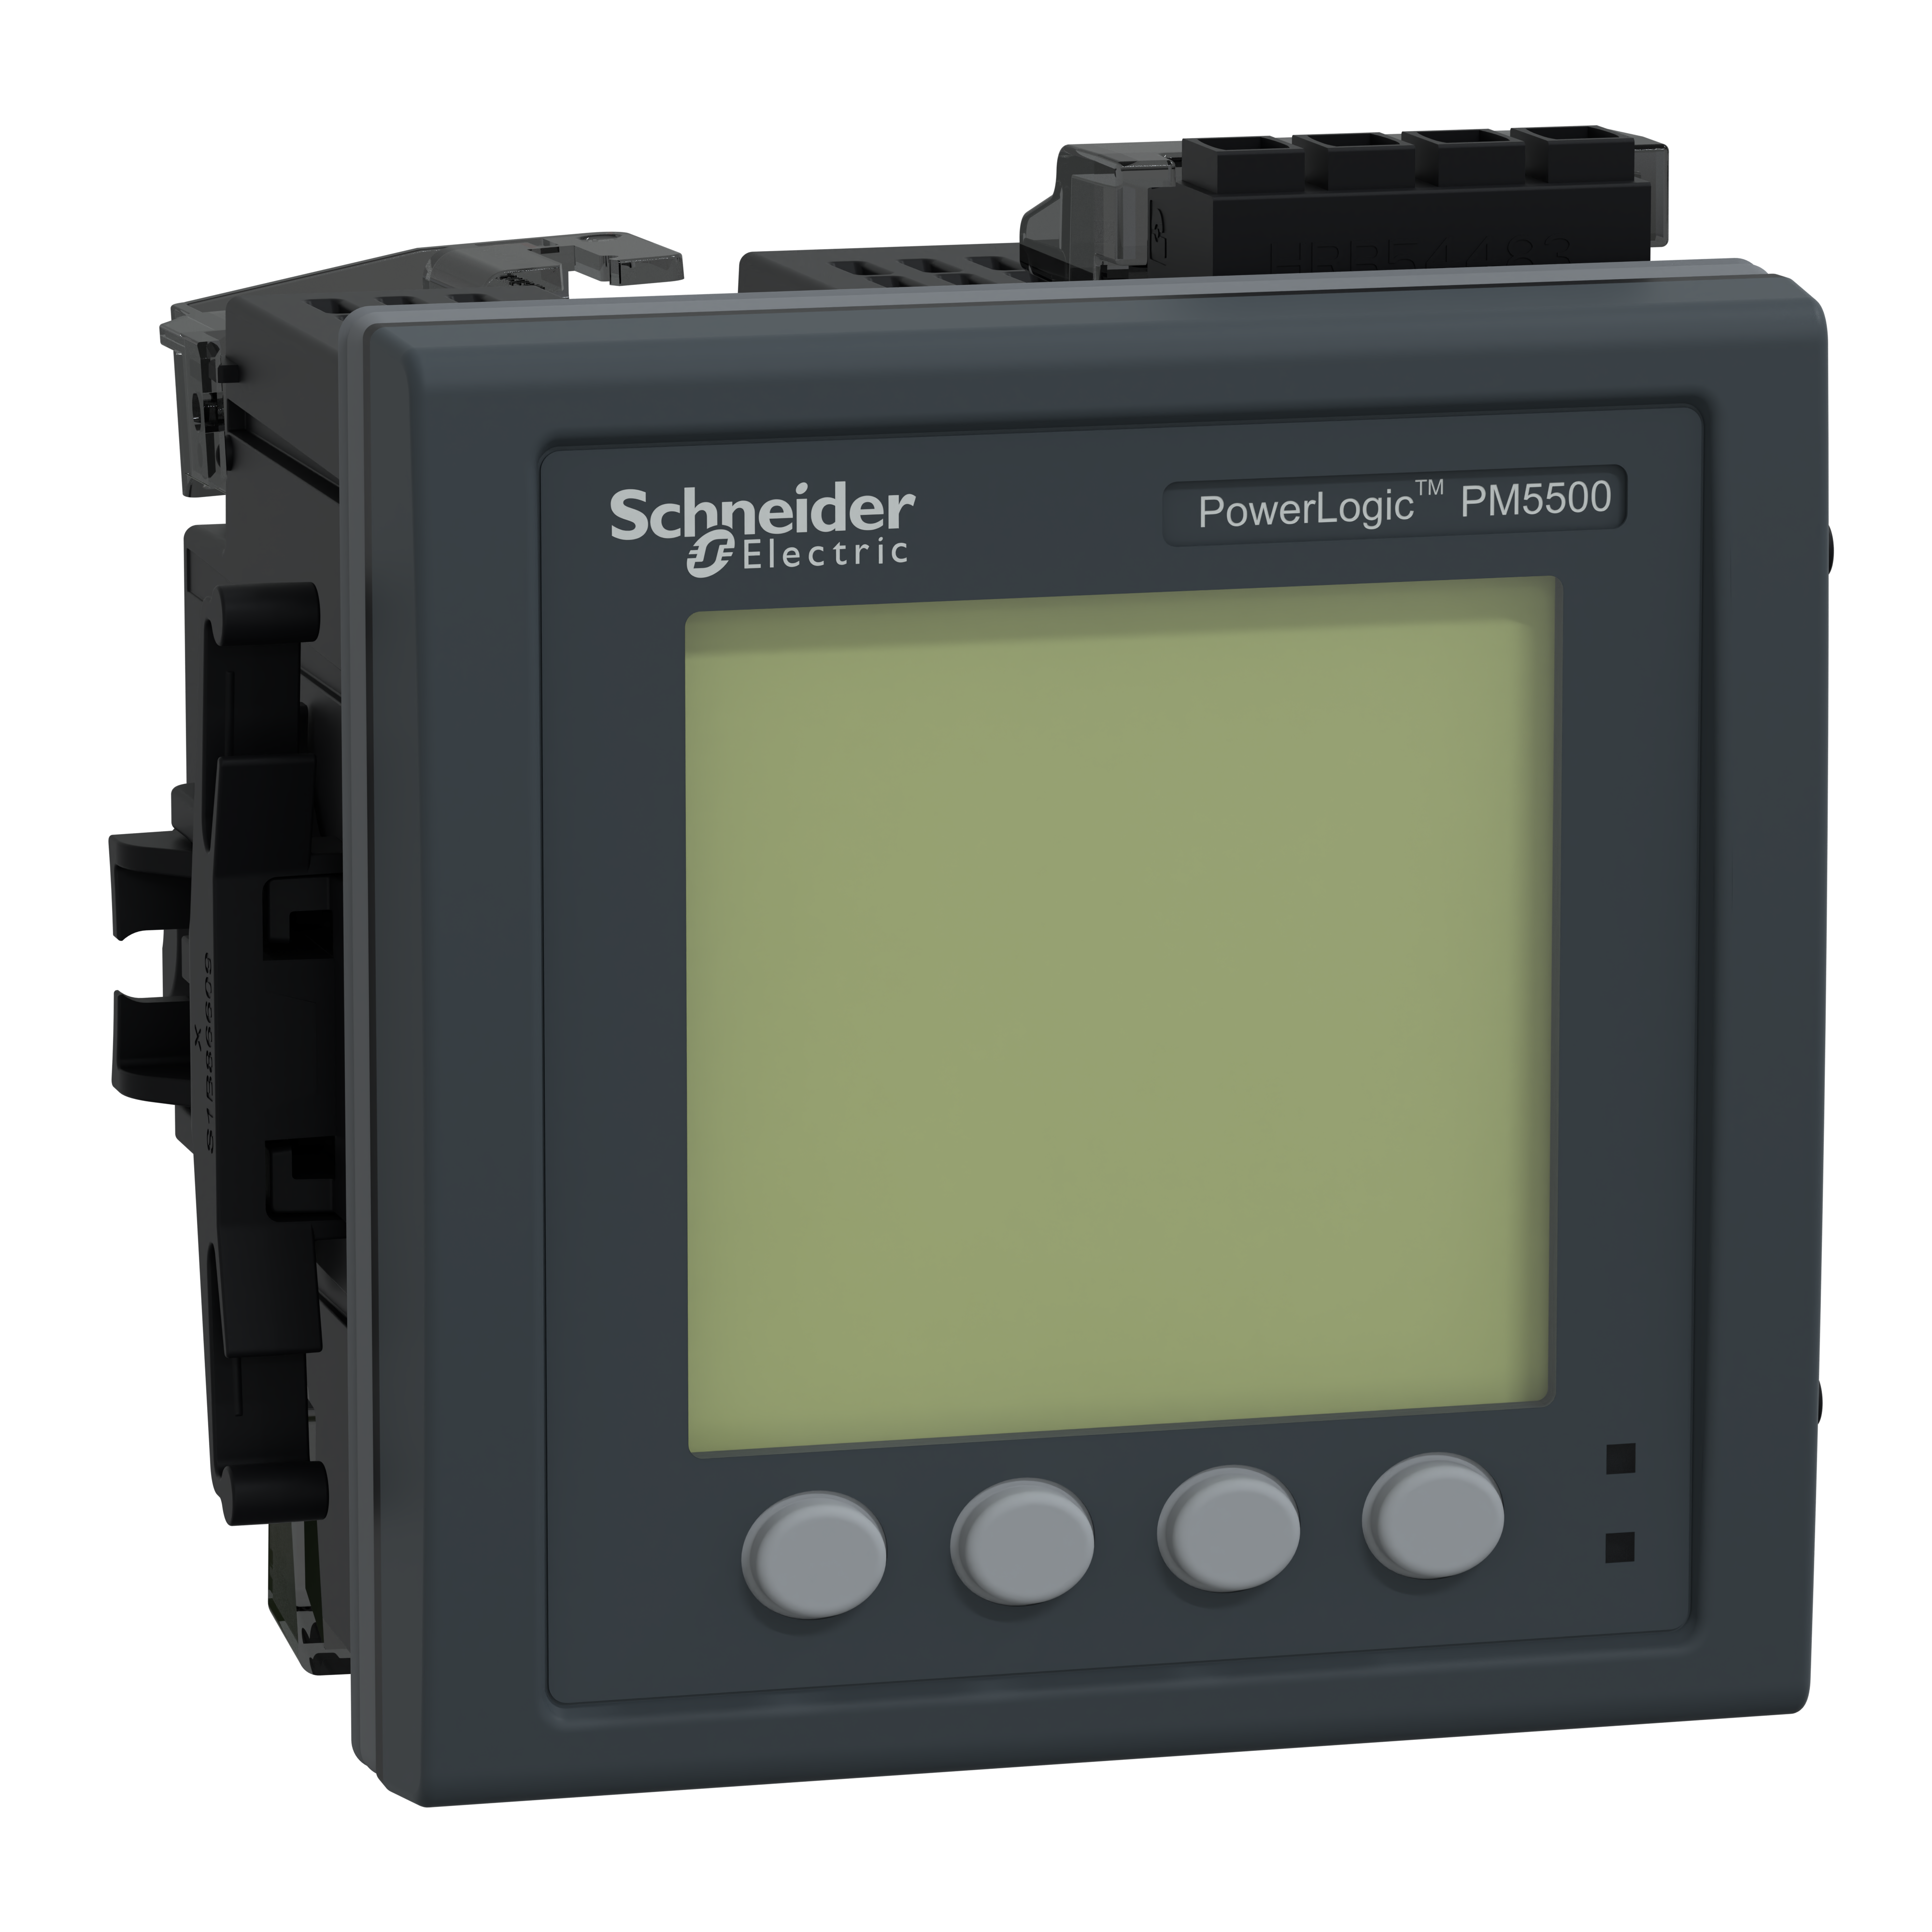 power meter PowerLogic PM5580, 2 ethernet, up to 63th Harmonic, 1,1MB, 24VDC, 4DI/2DO 52 alarms